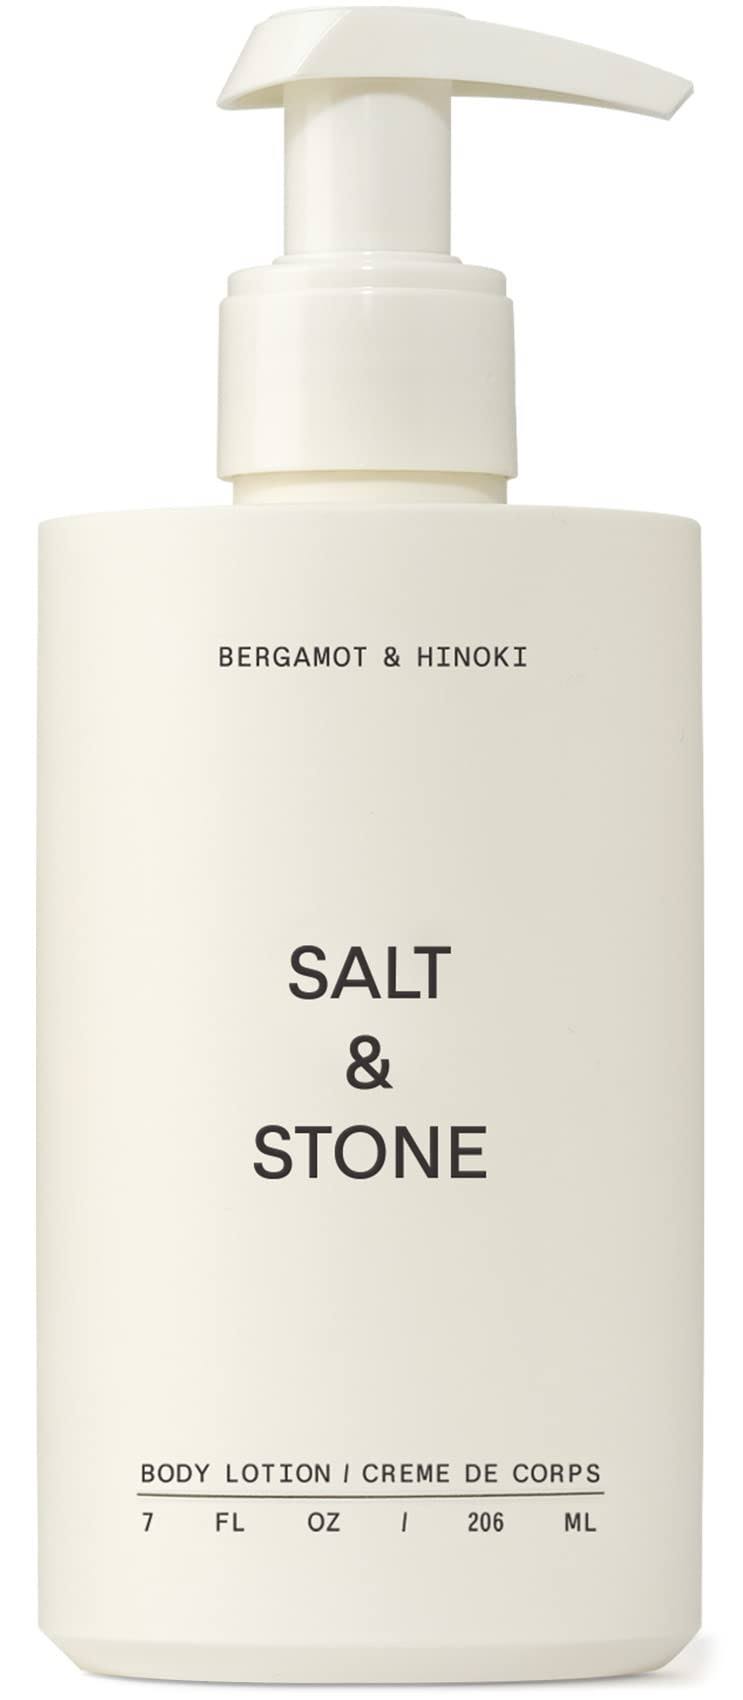 Salt & Stone Bergamot & Hinoki Body Lotion 206ml